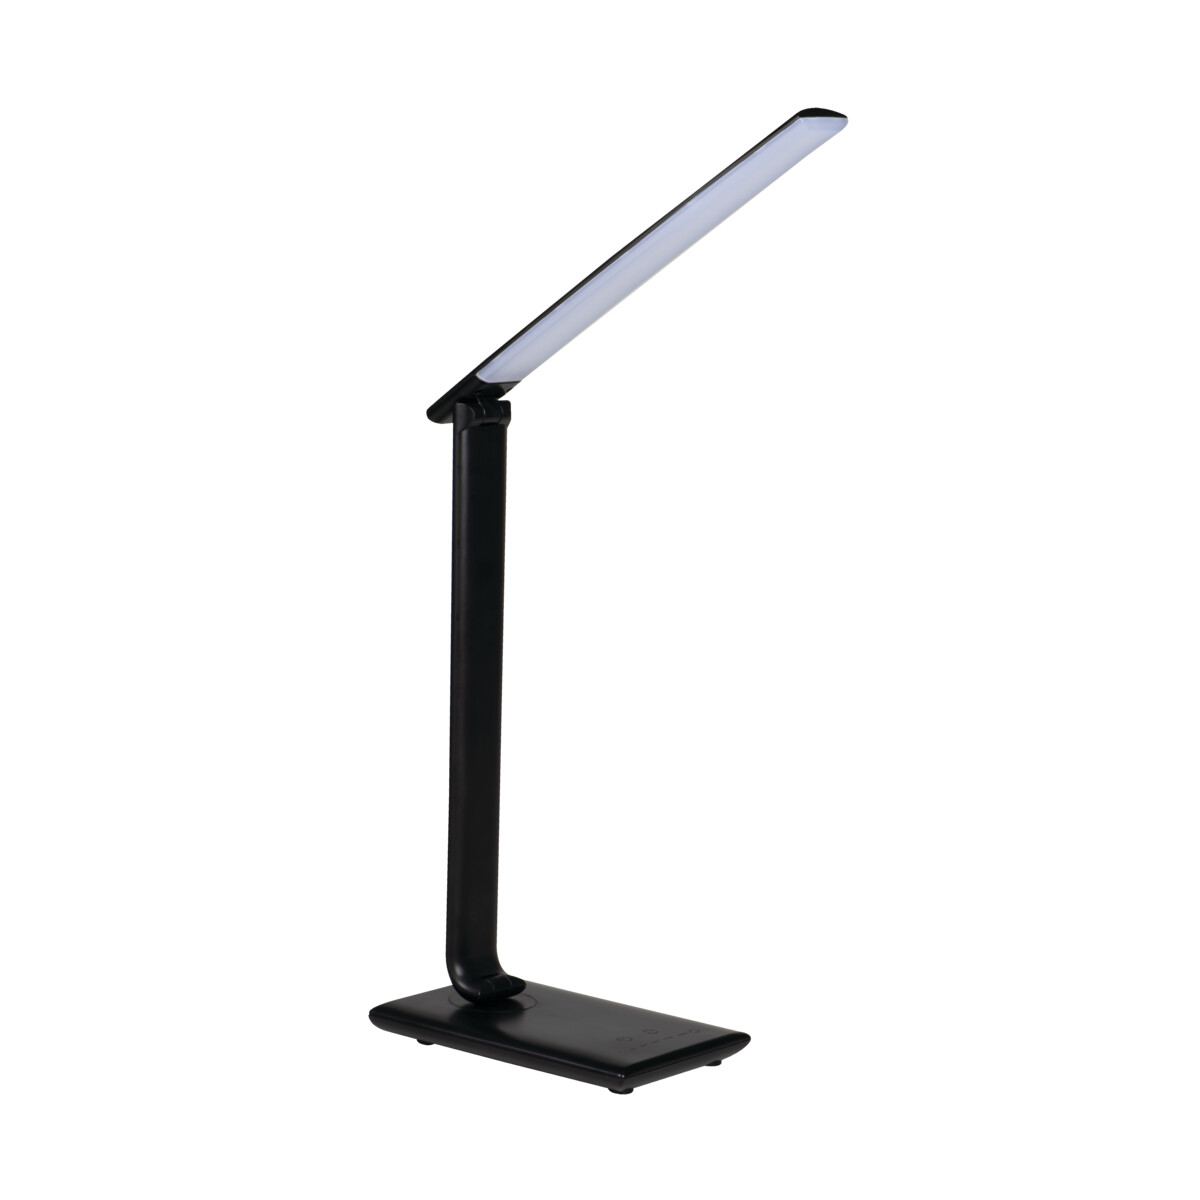 Lampada da tavolo LED INITA LED IP54 GN - Kanlux